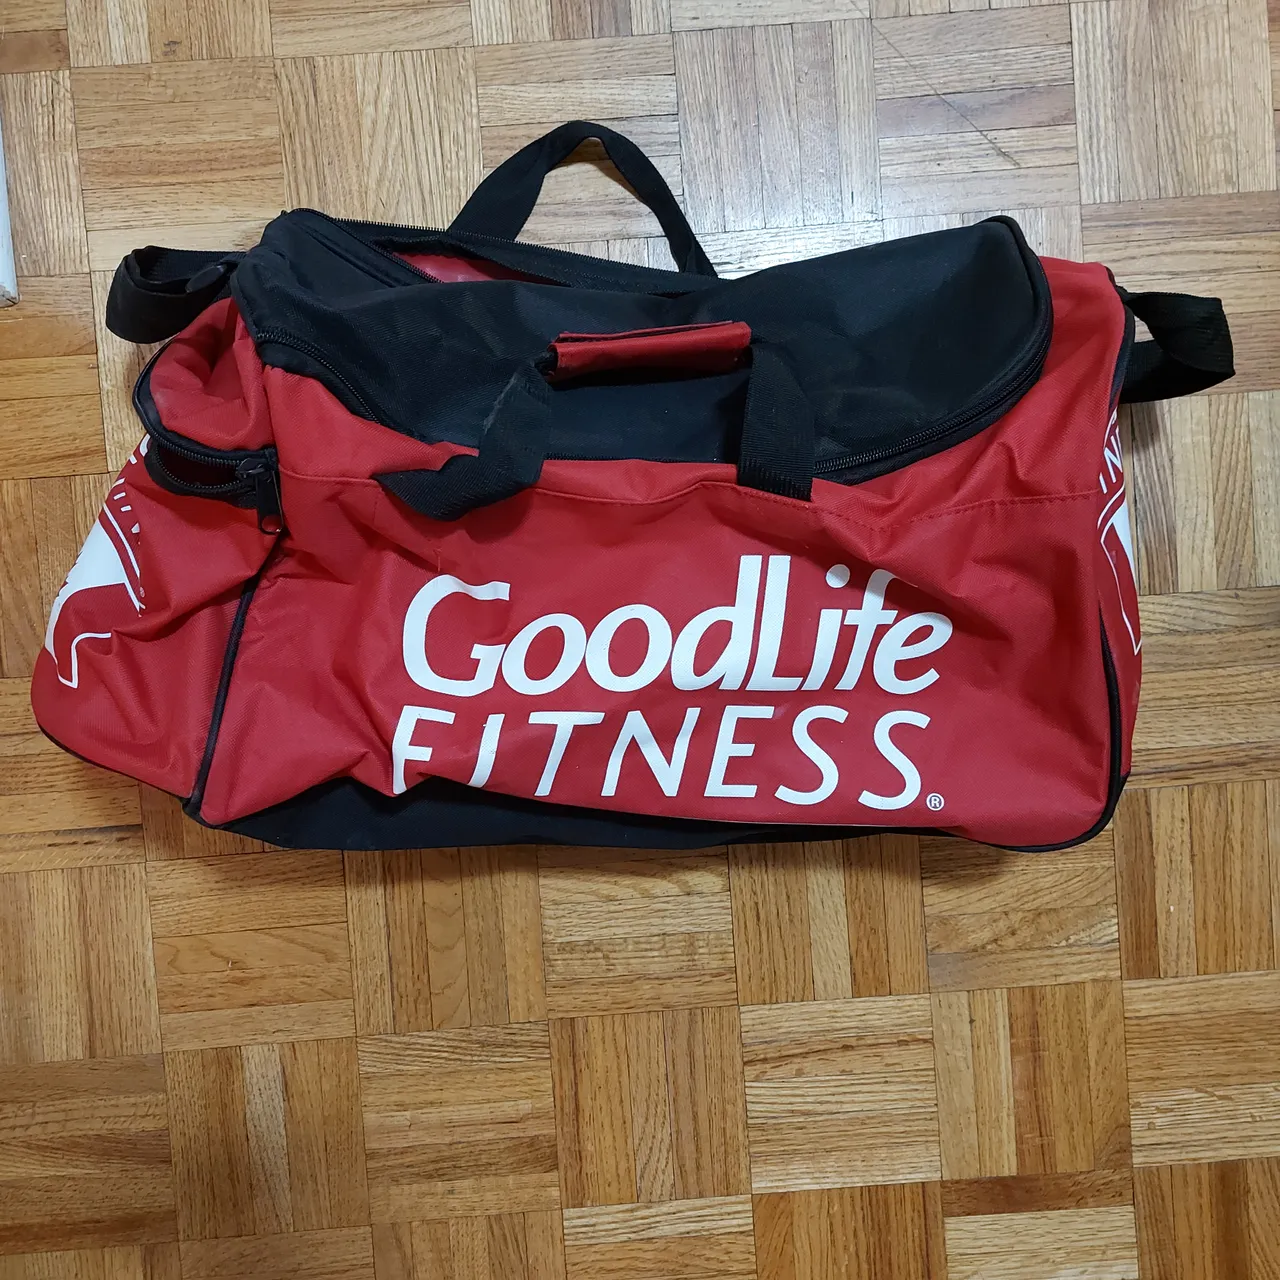 Goodlife fitness duffle bag photo 2